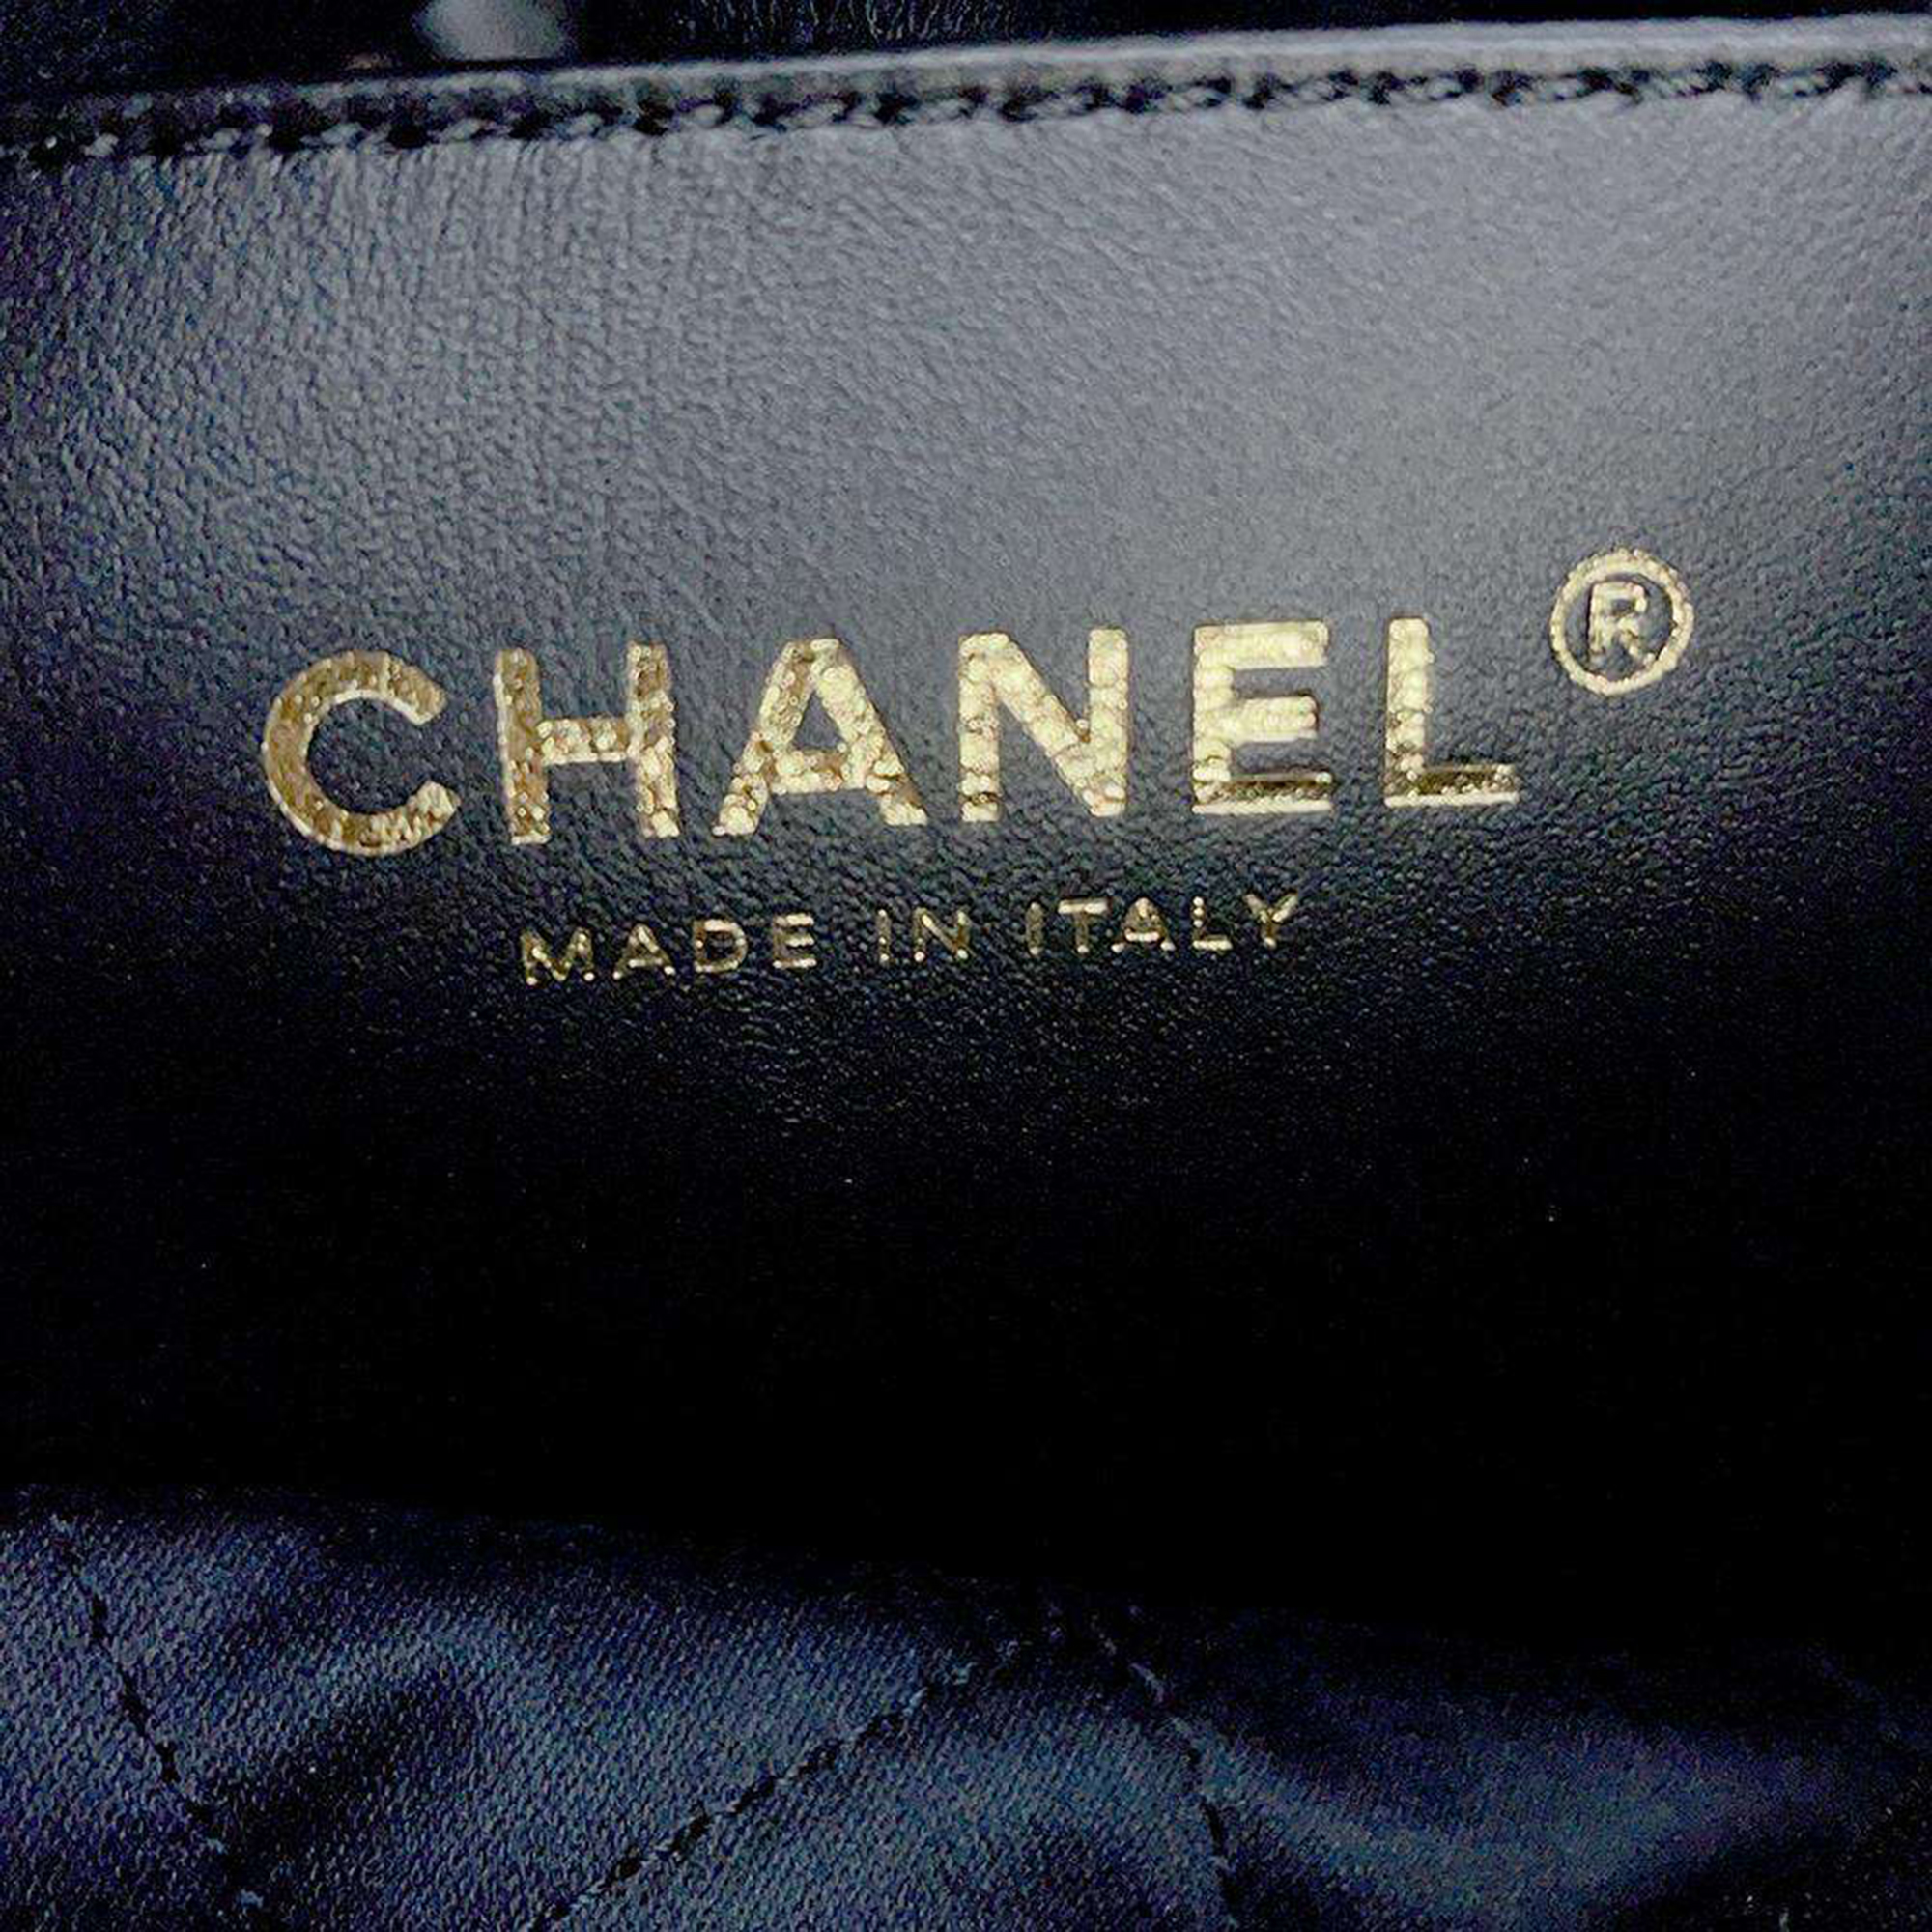 Chanel Black Leather Mini 22 Hobo Bag